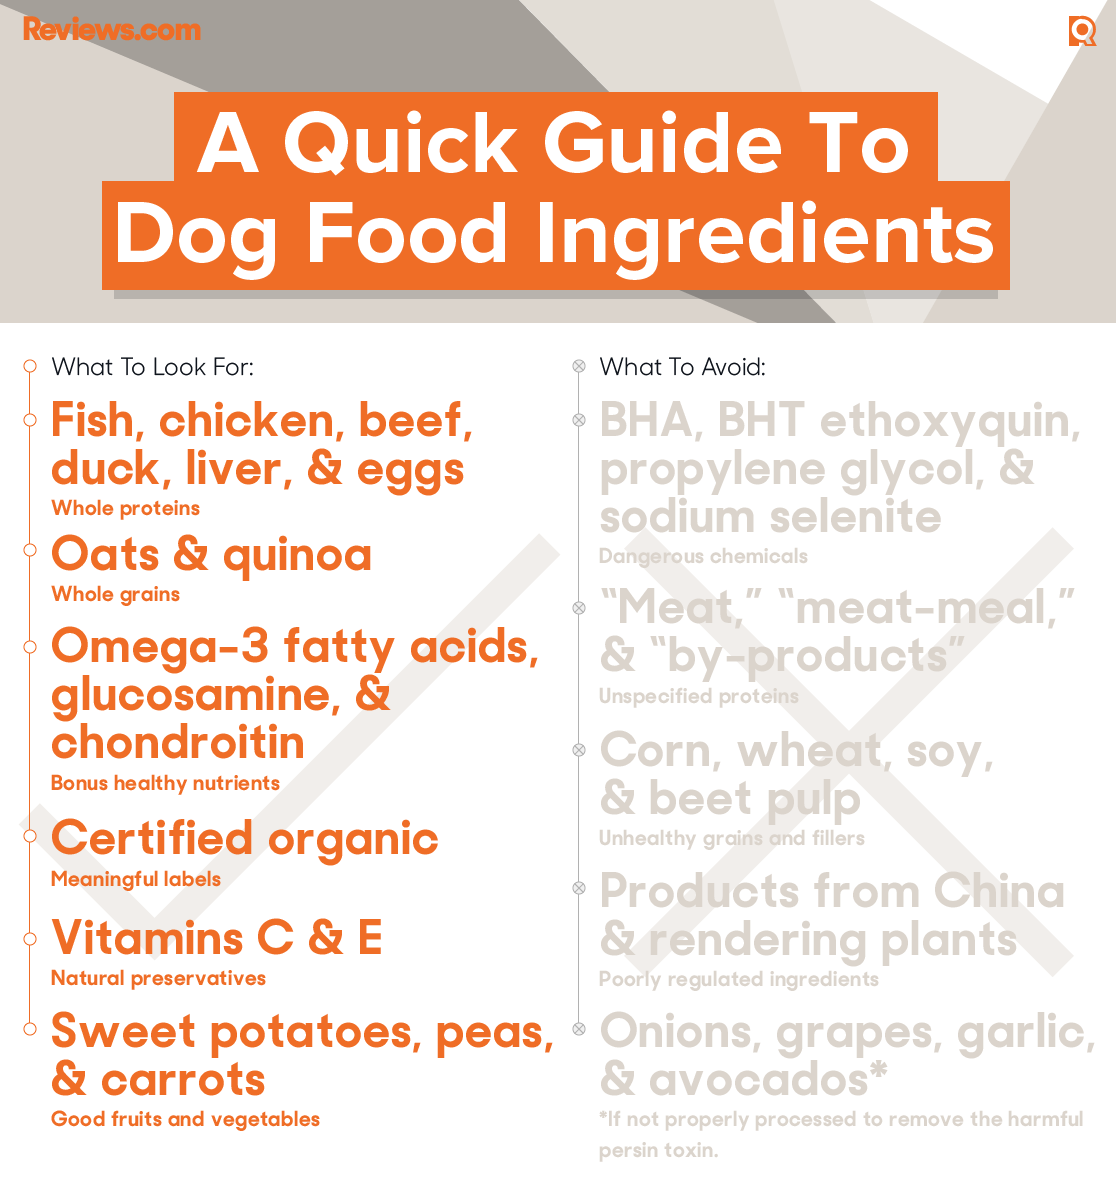 Best Dry Dog Food Comparison Chart